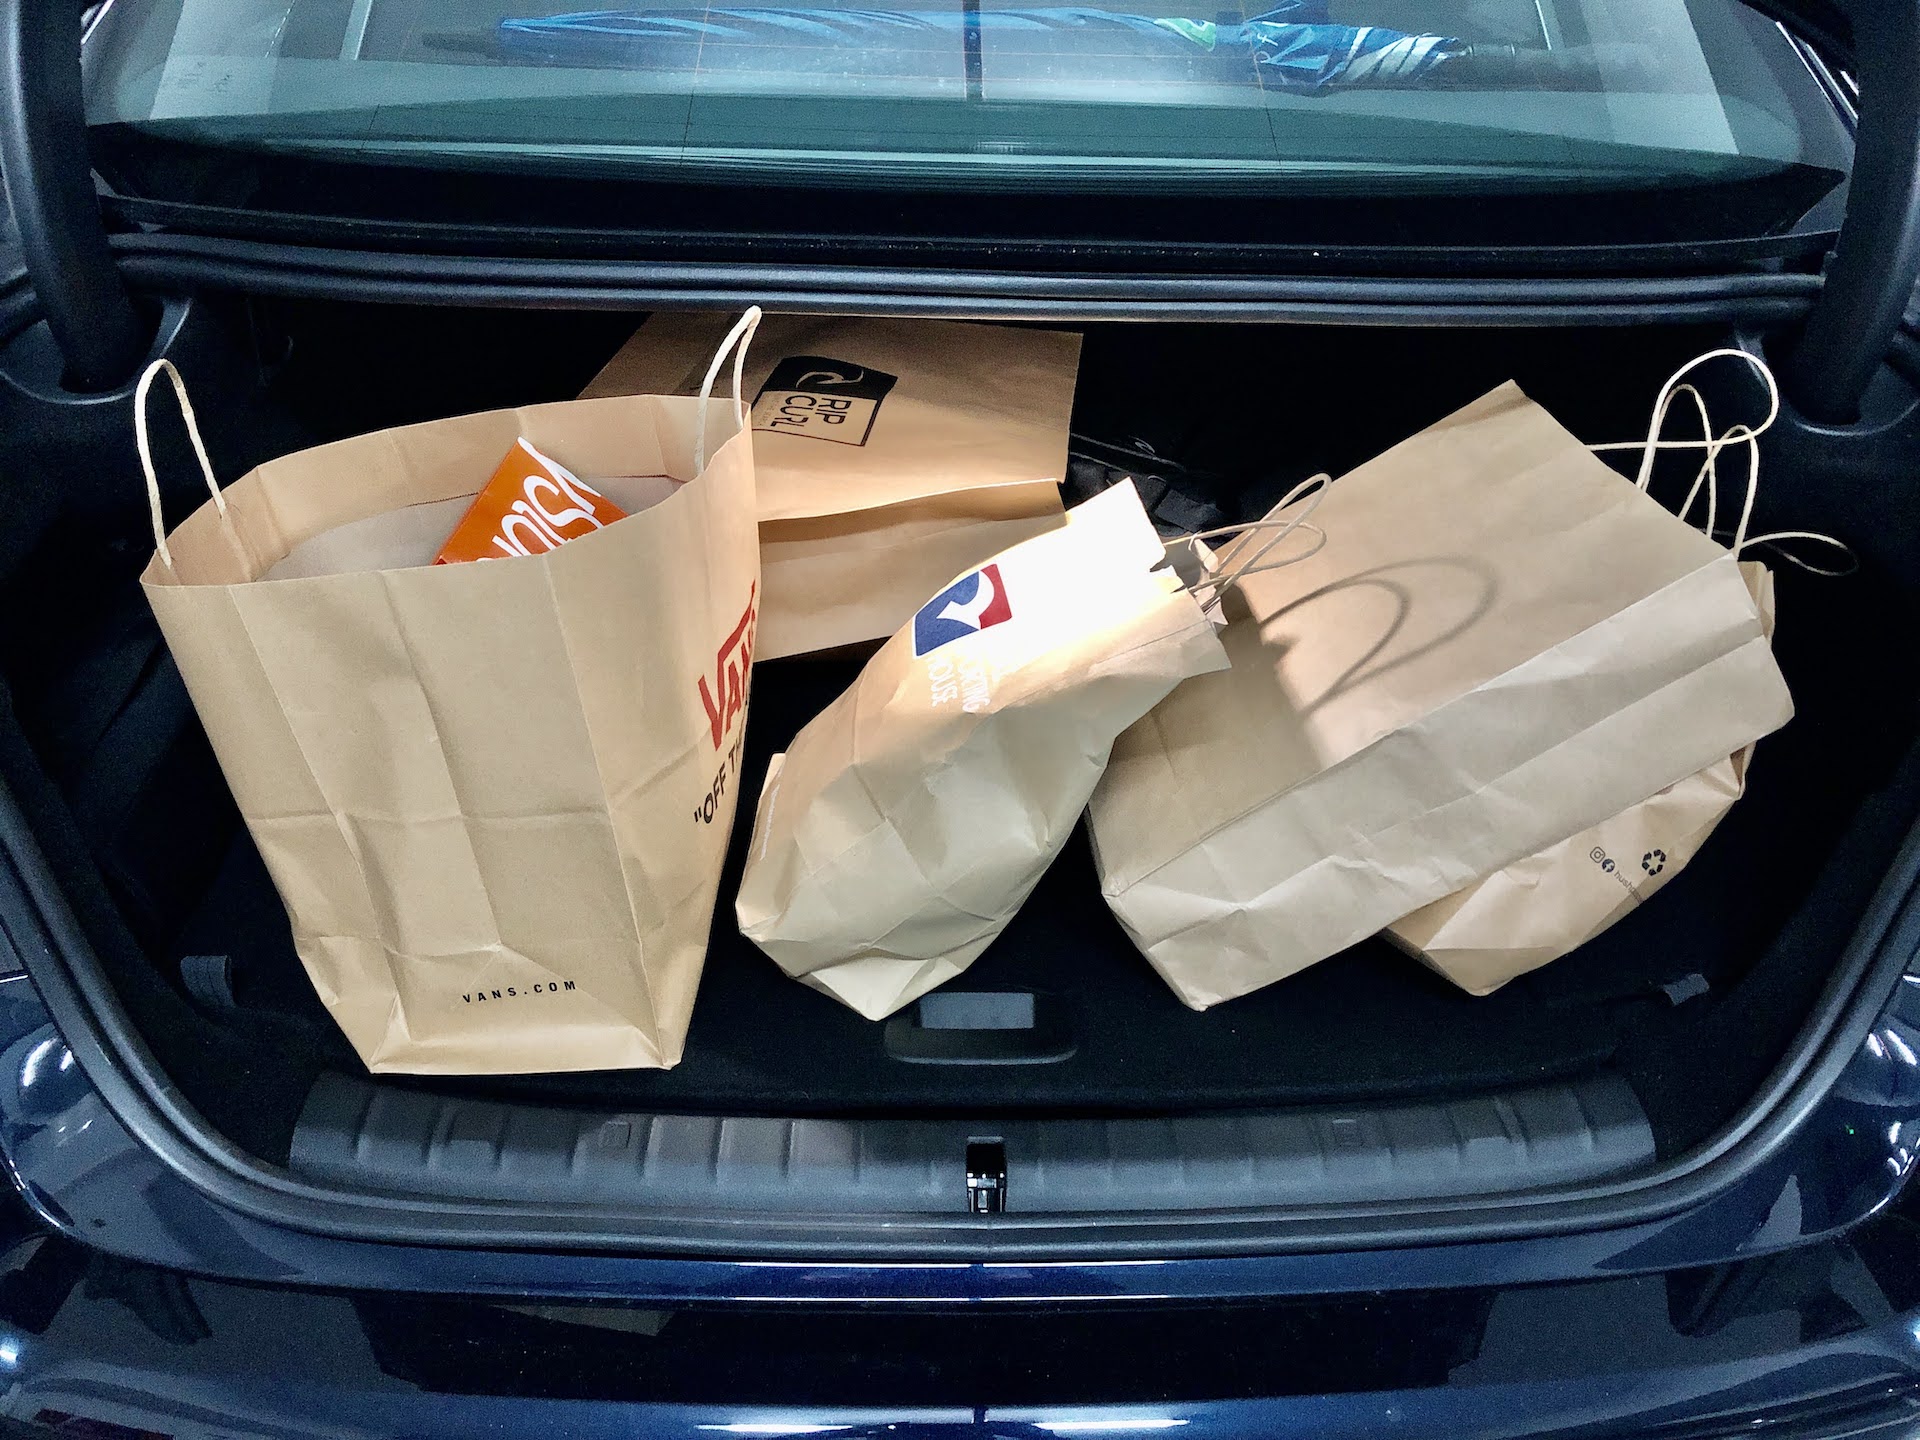 BMW 530e PHEV_shopping bags